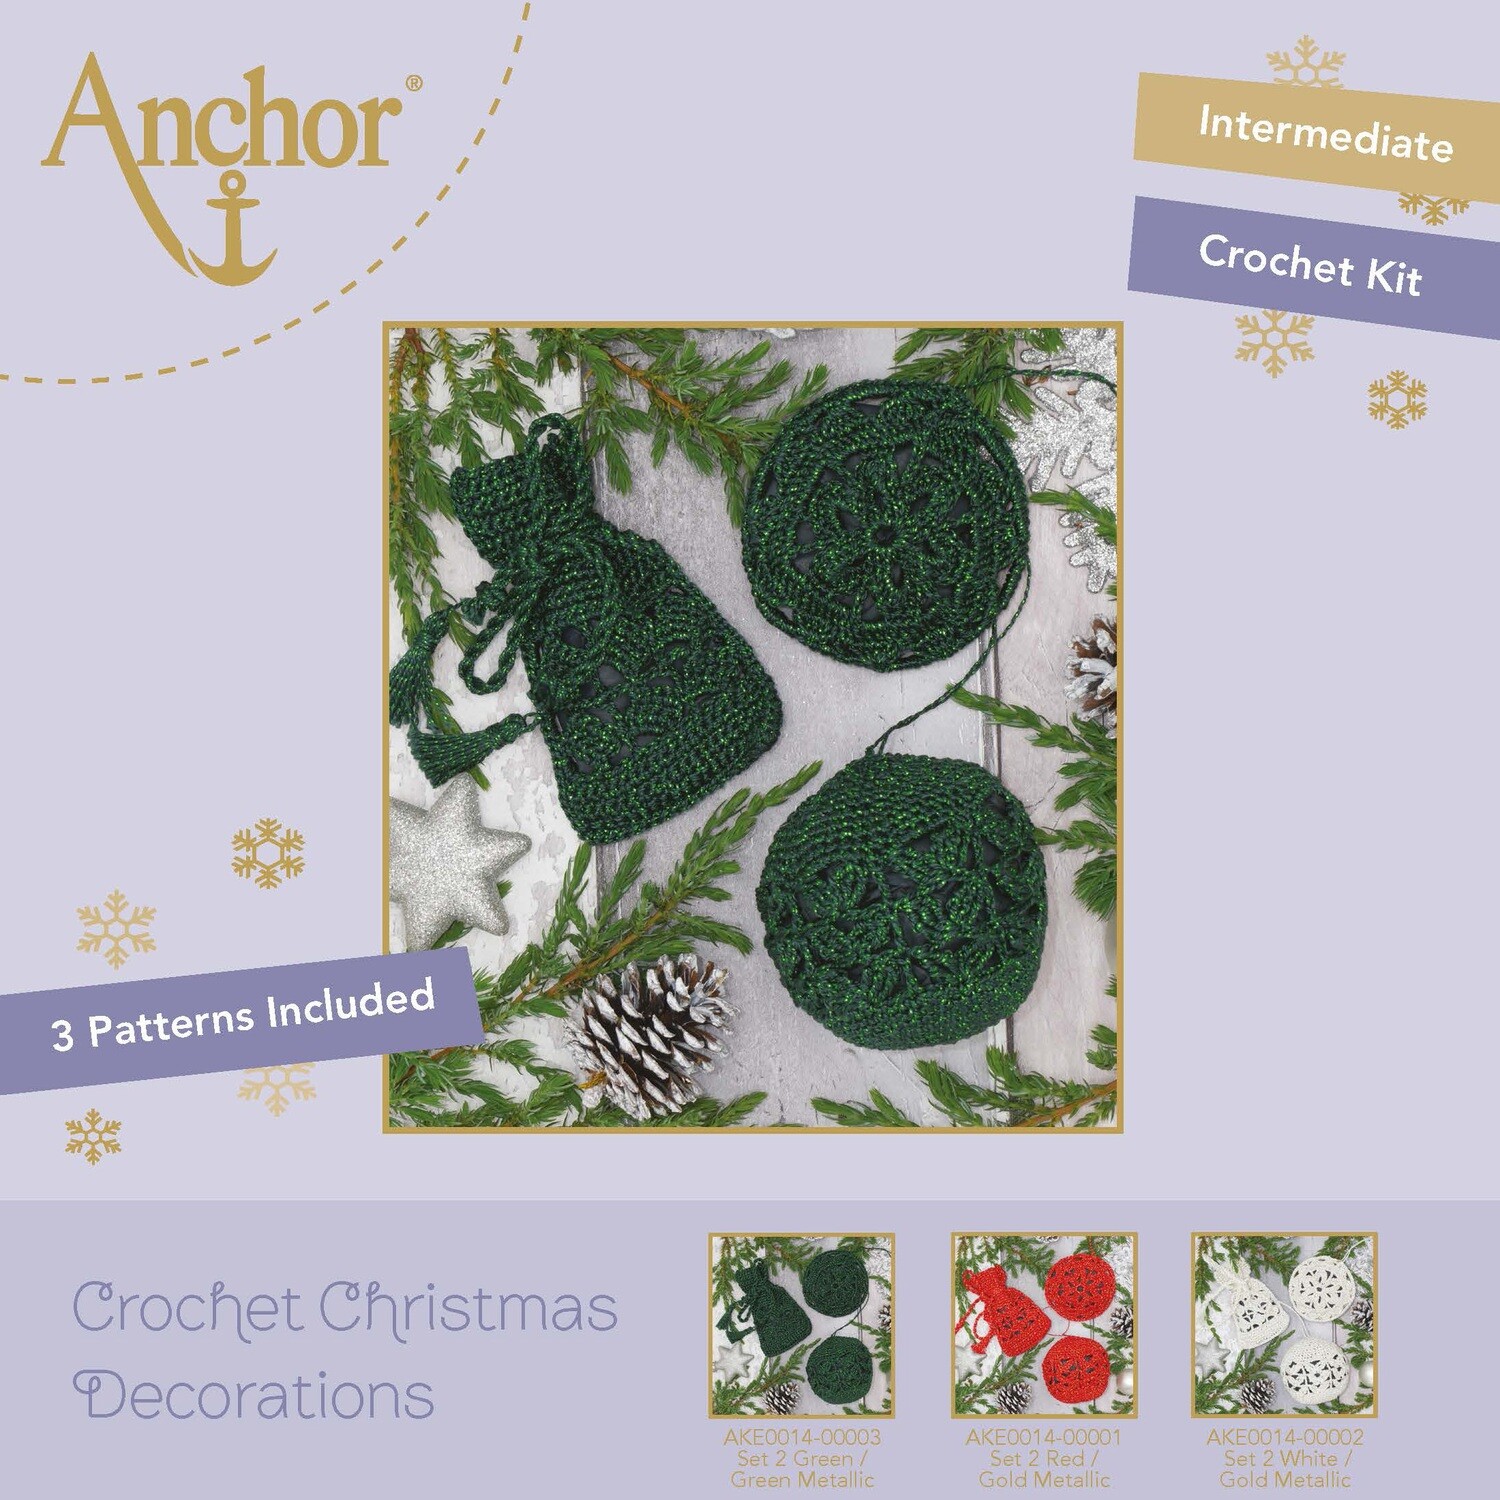 Crochet Christmas Decorations - Set 2 Green/Green Metallic